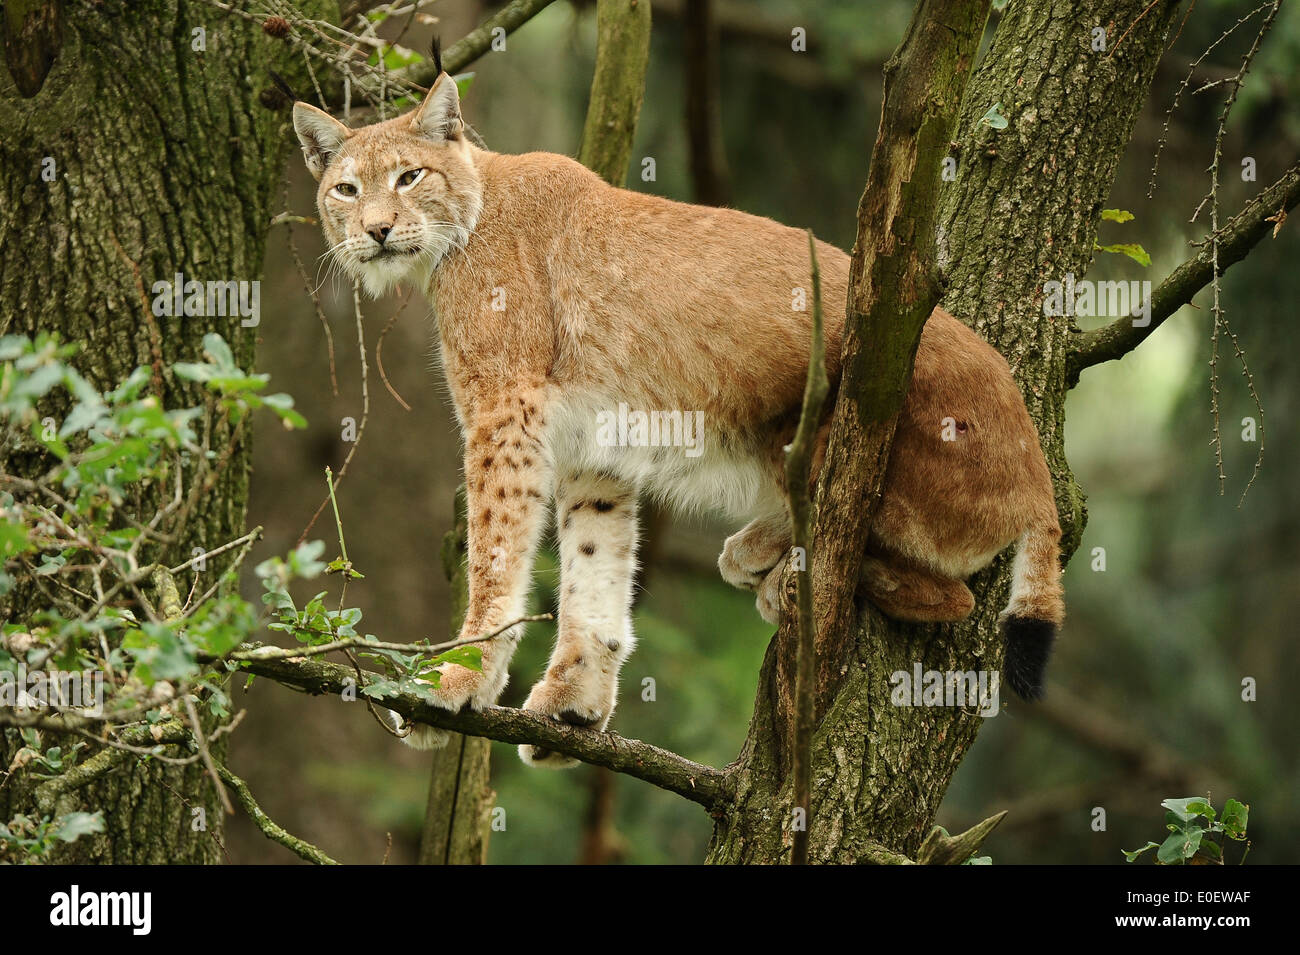 Eurasian Lynx (Lynx lynx) Europäischer Luchs, standing on a tree, Stock Photo